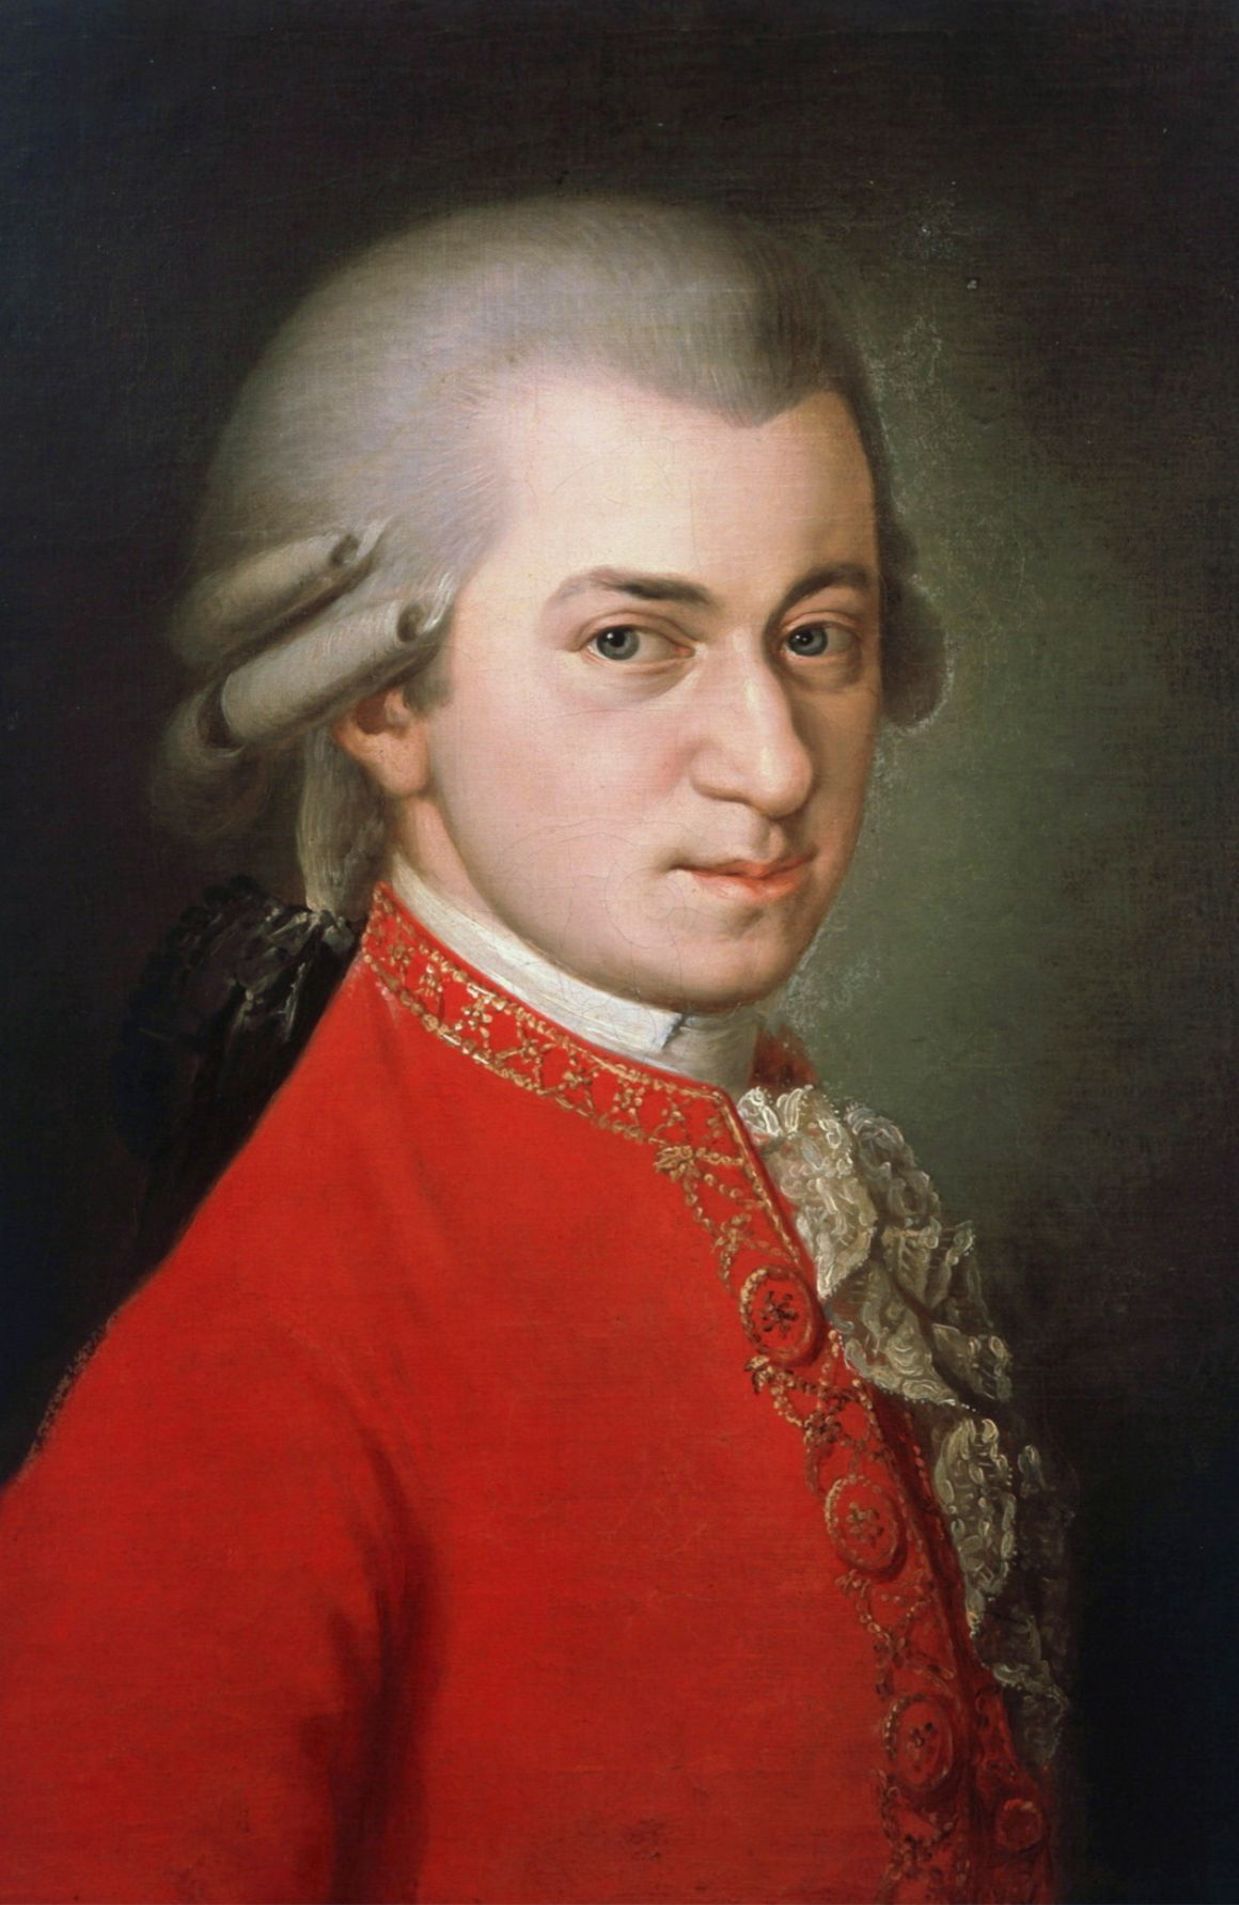 Portrait de Wolfgang Amadeus Mozart peint par Barbara Krafft en 1819.